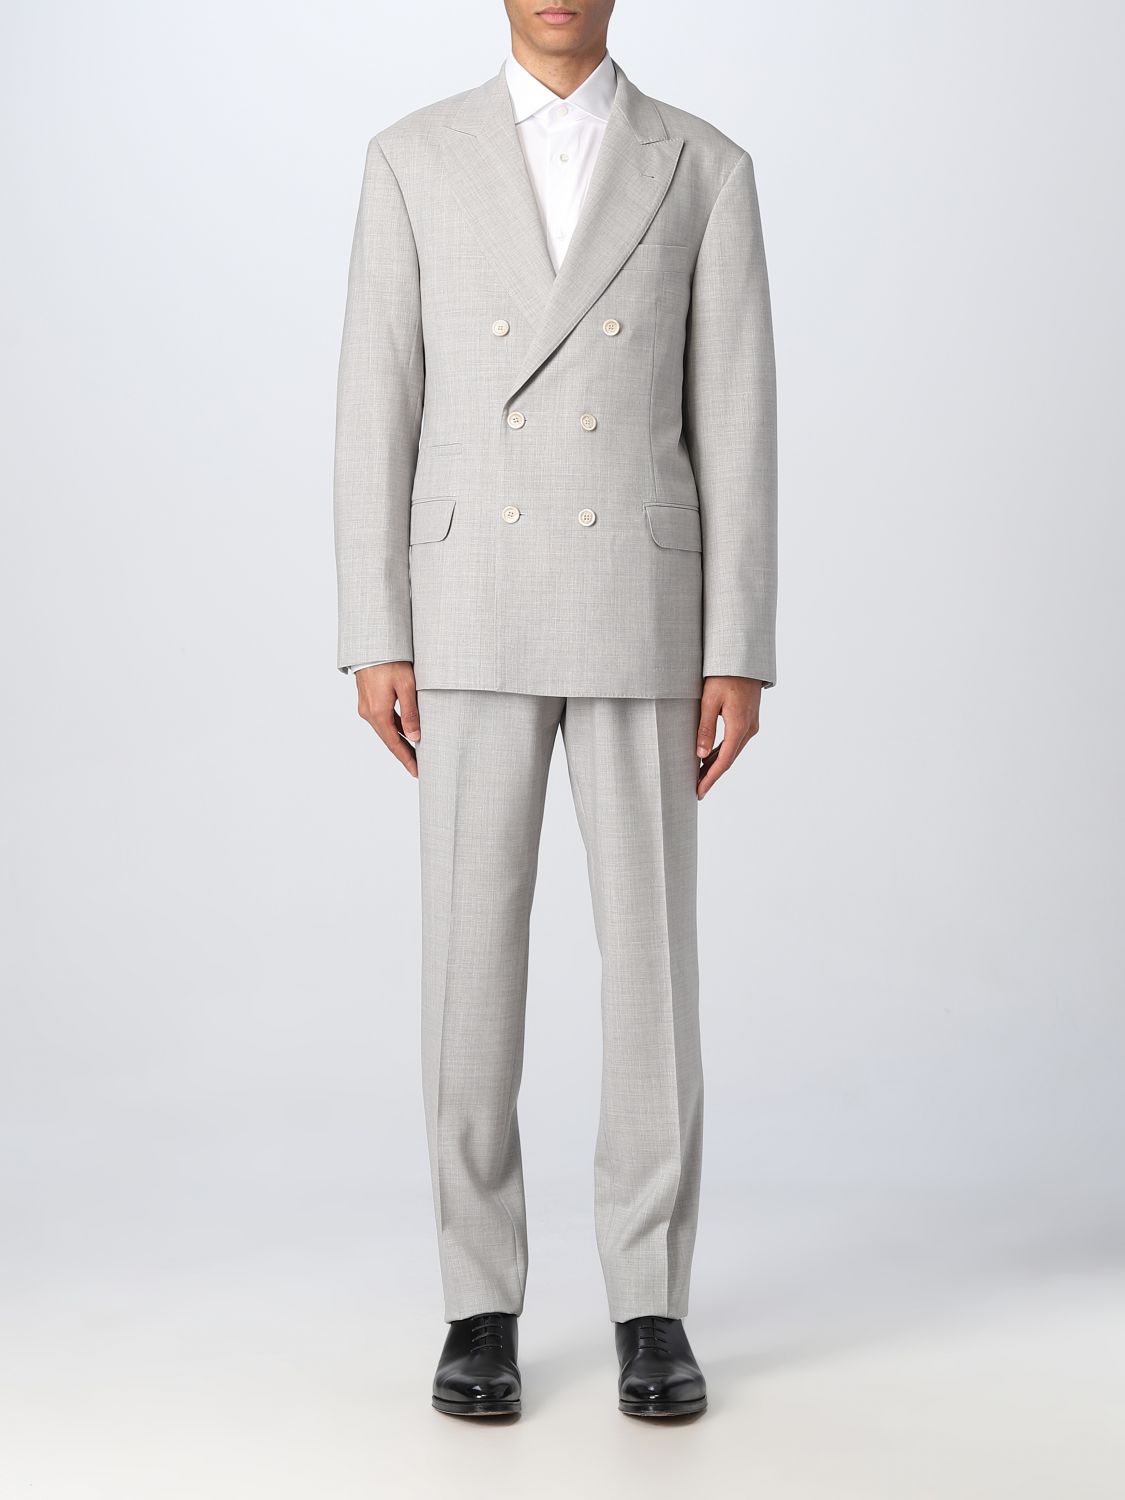 BRUNELLO CUCINELLI: suit for man - Pearl | Brunello Cucinelli suit ...